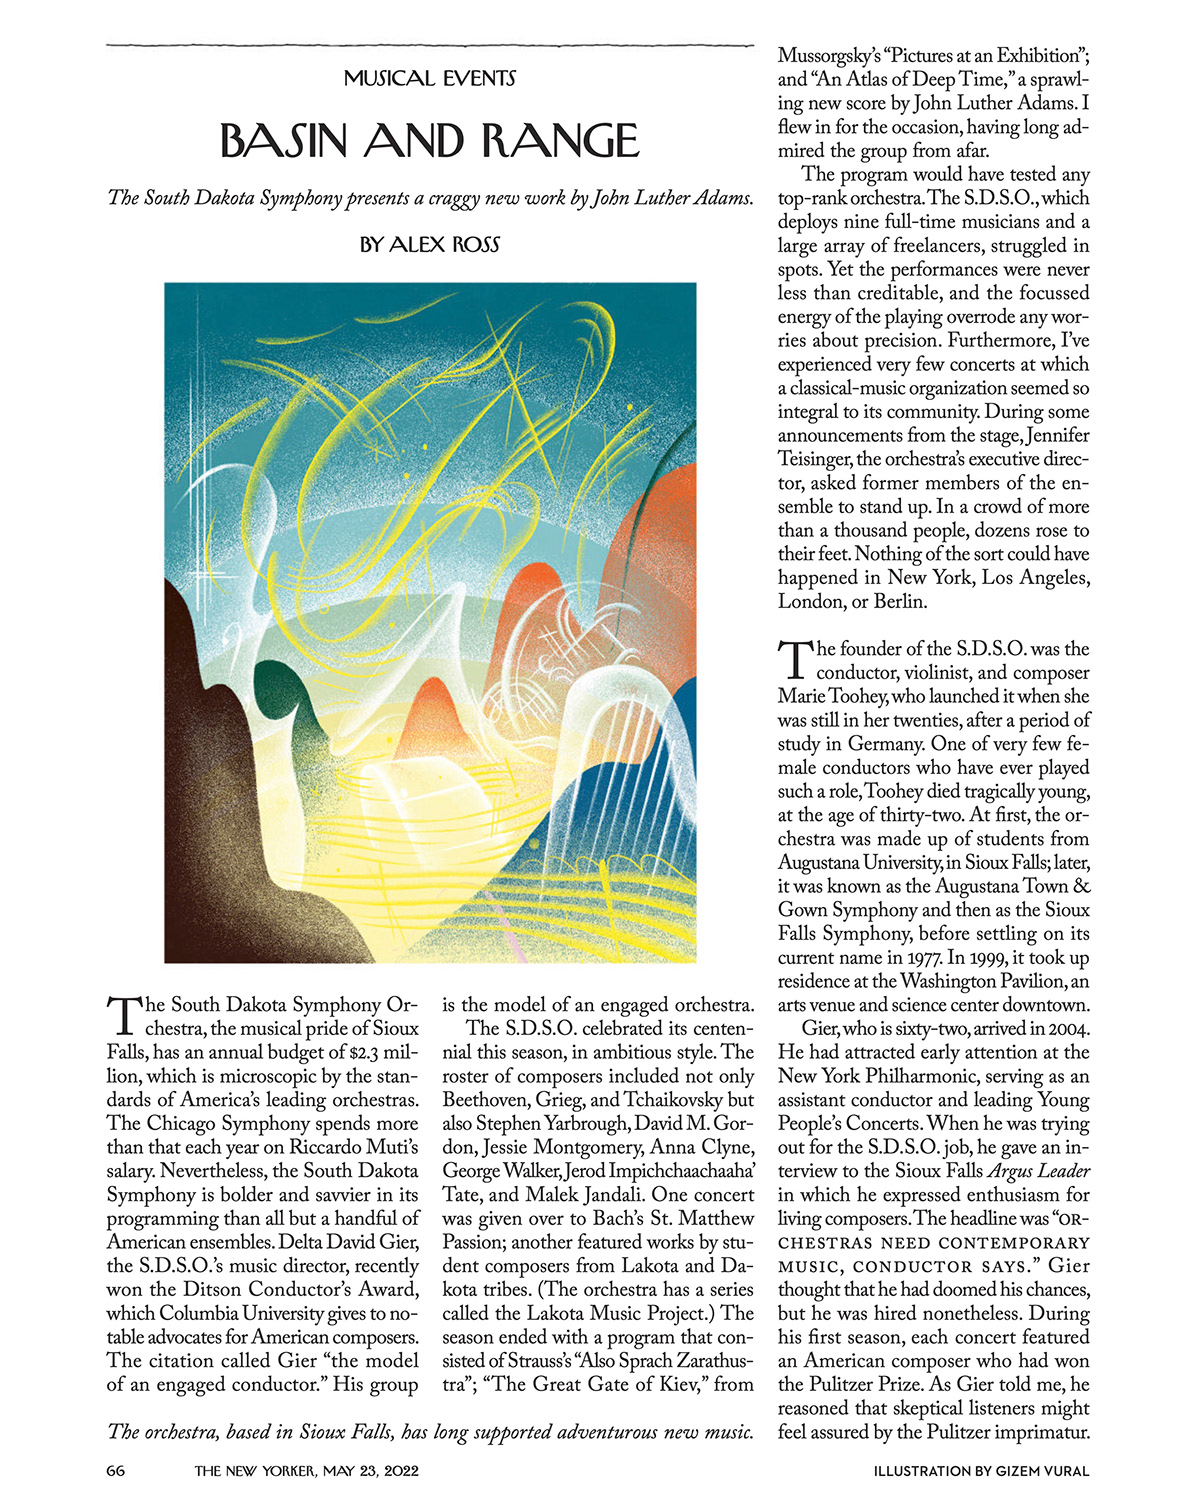 artwork classical music digital illustration Drawing  editorial Editorial Illustration gizem vural ILLUSTRATION  musical events The New Yorker